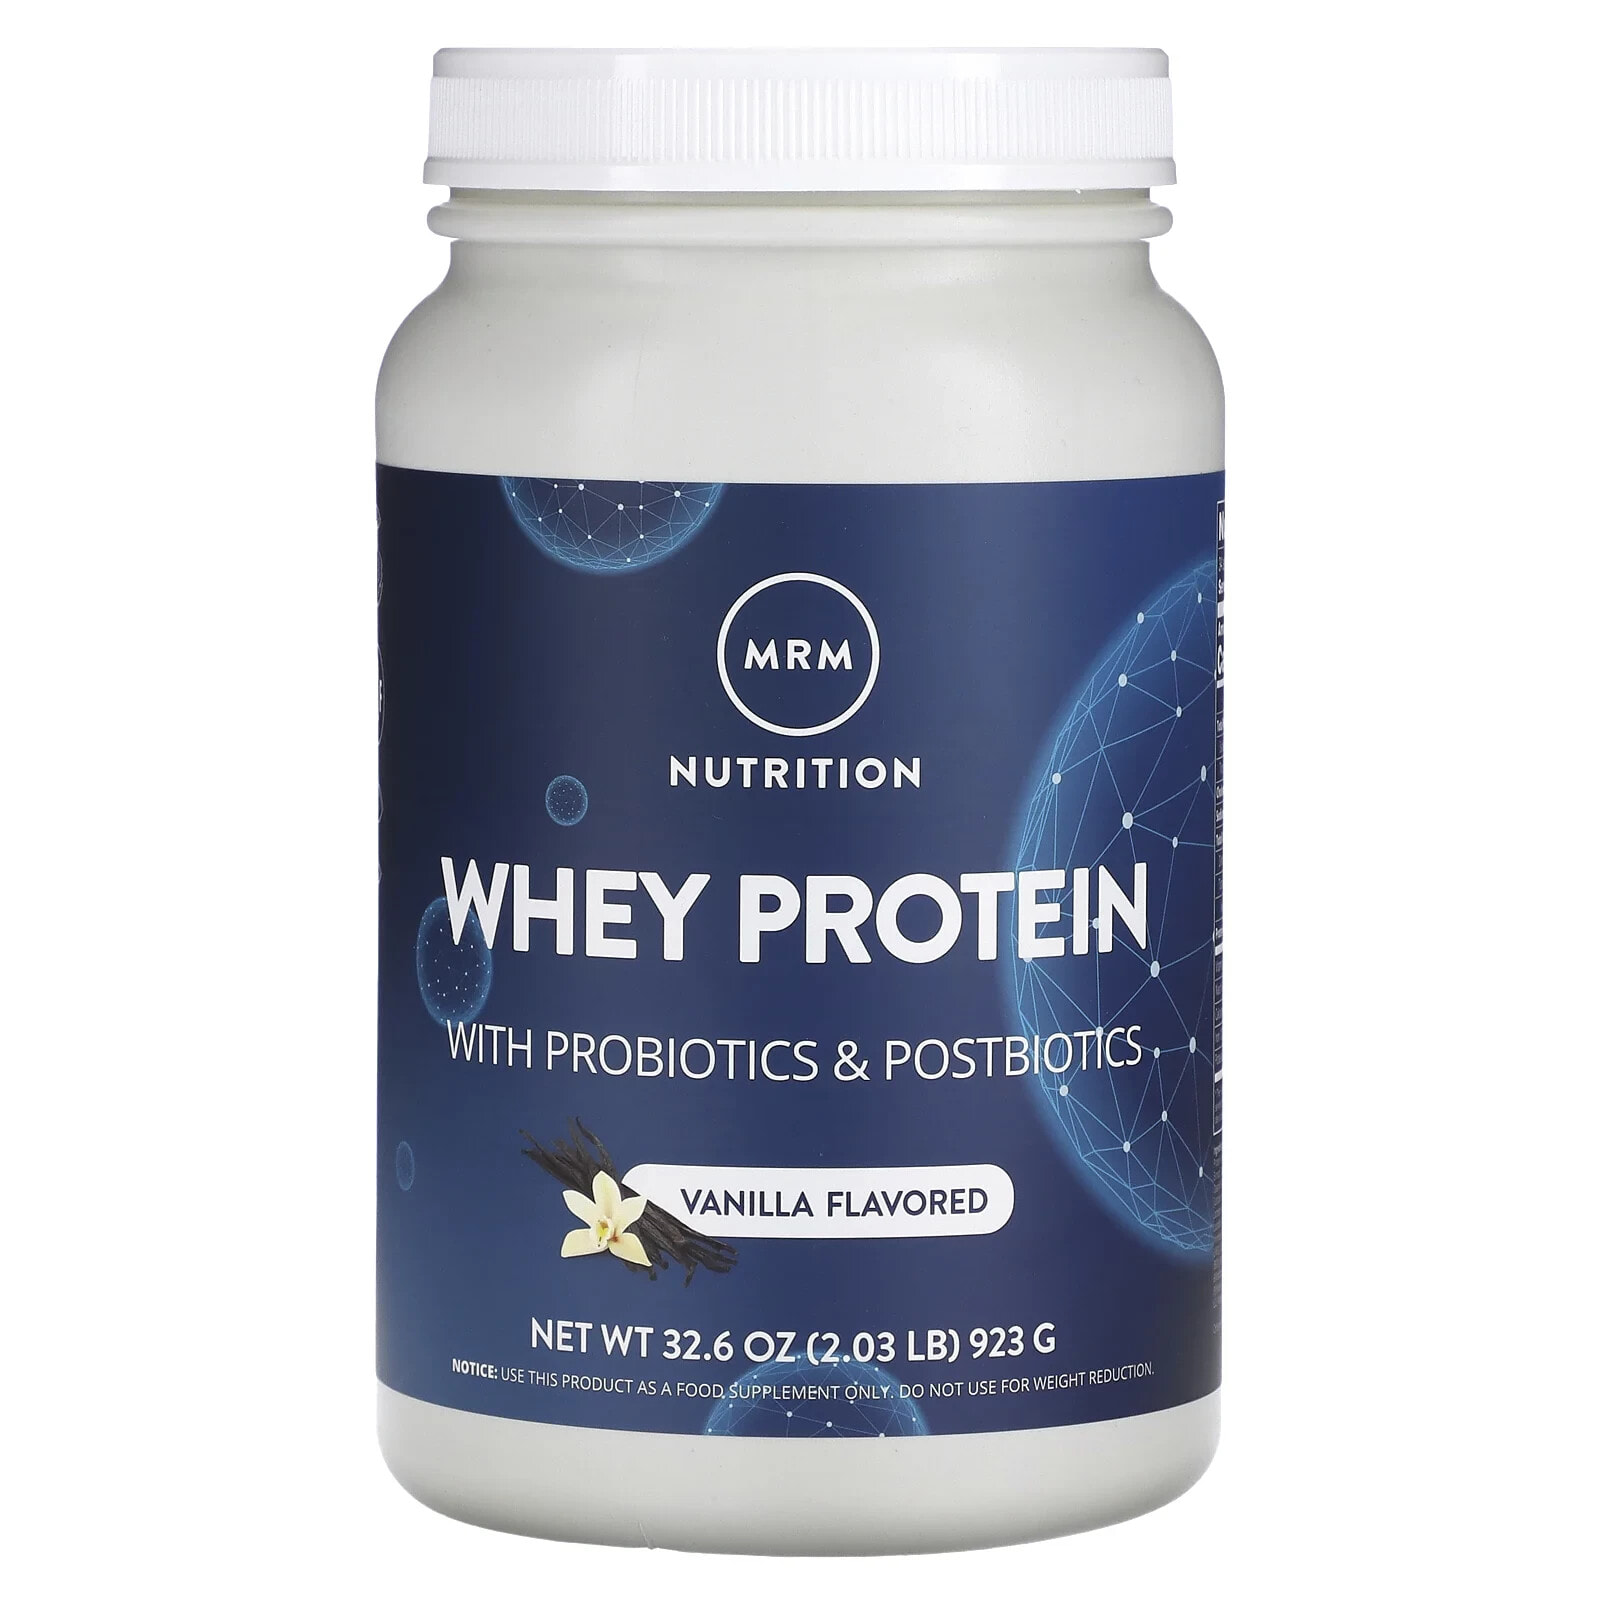 Whey Protein with Probiotics & Postbiotics, Chocolate, 5 lb (2,270 g)